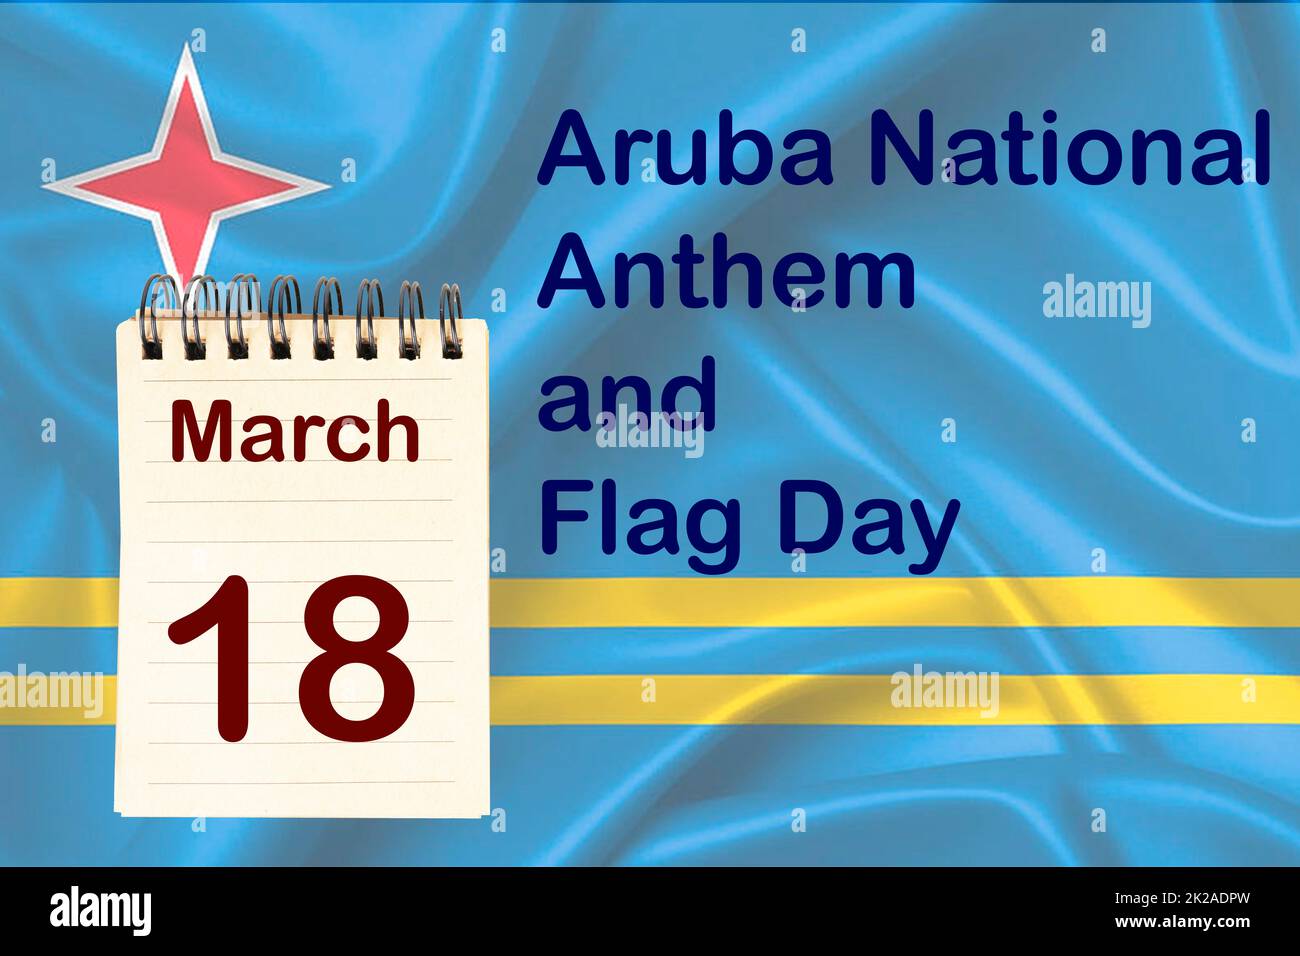 Aruba National Anthem and Flag Day Stock Photo